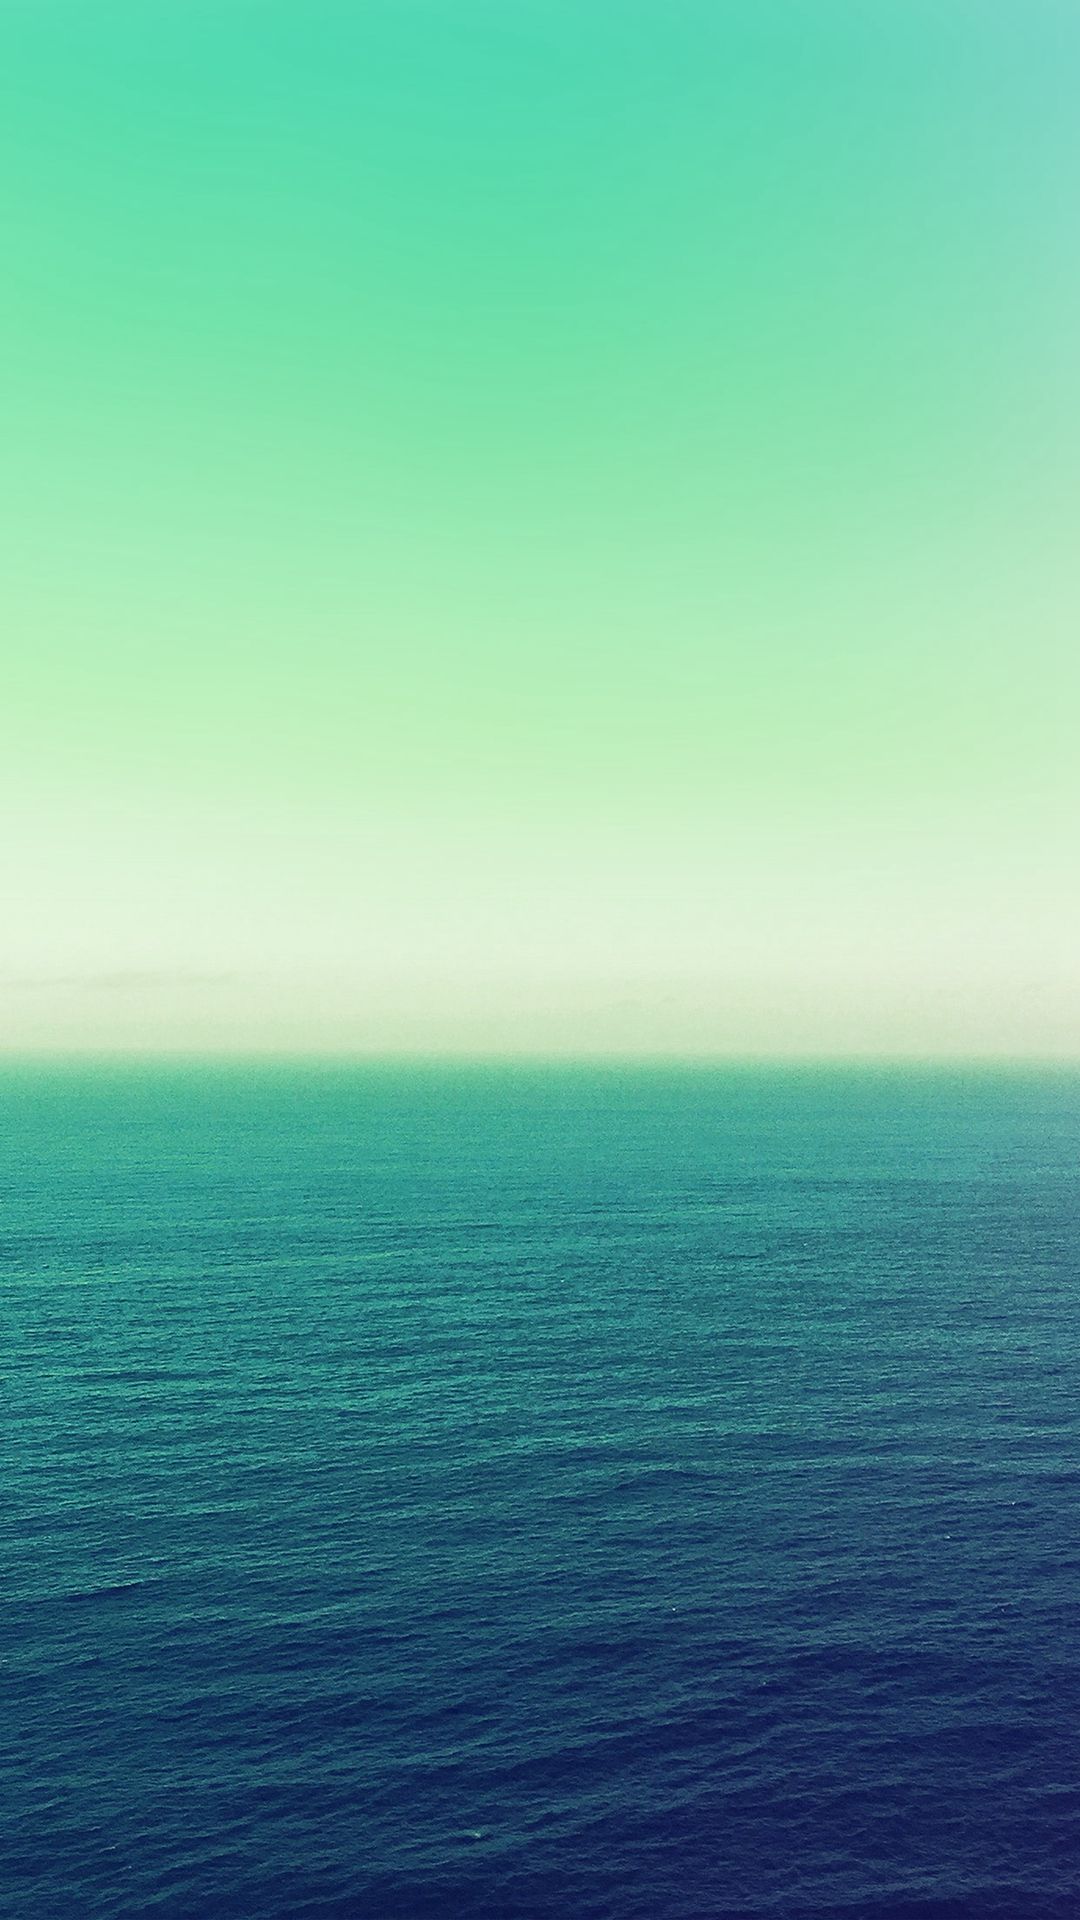 Calm Sea Green Ocean Water Summer Day Nature iPhone 8 Wallpaper Free Download